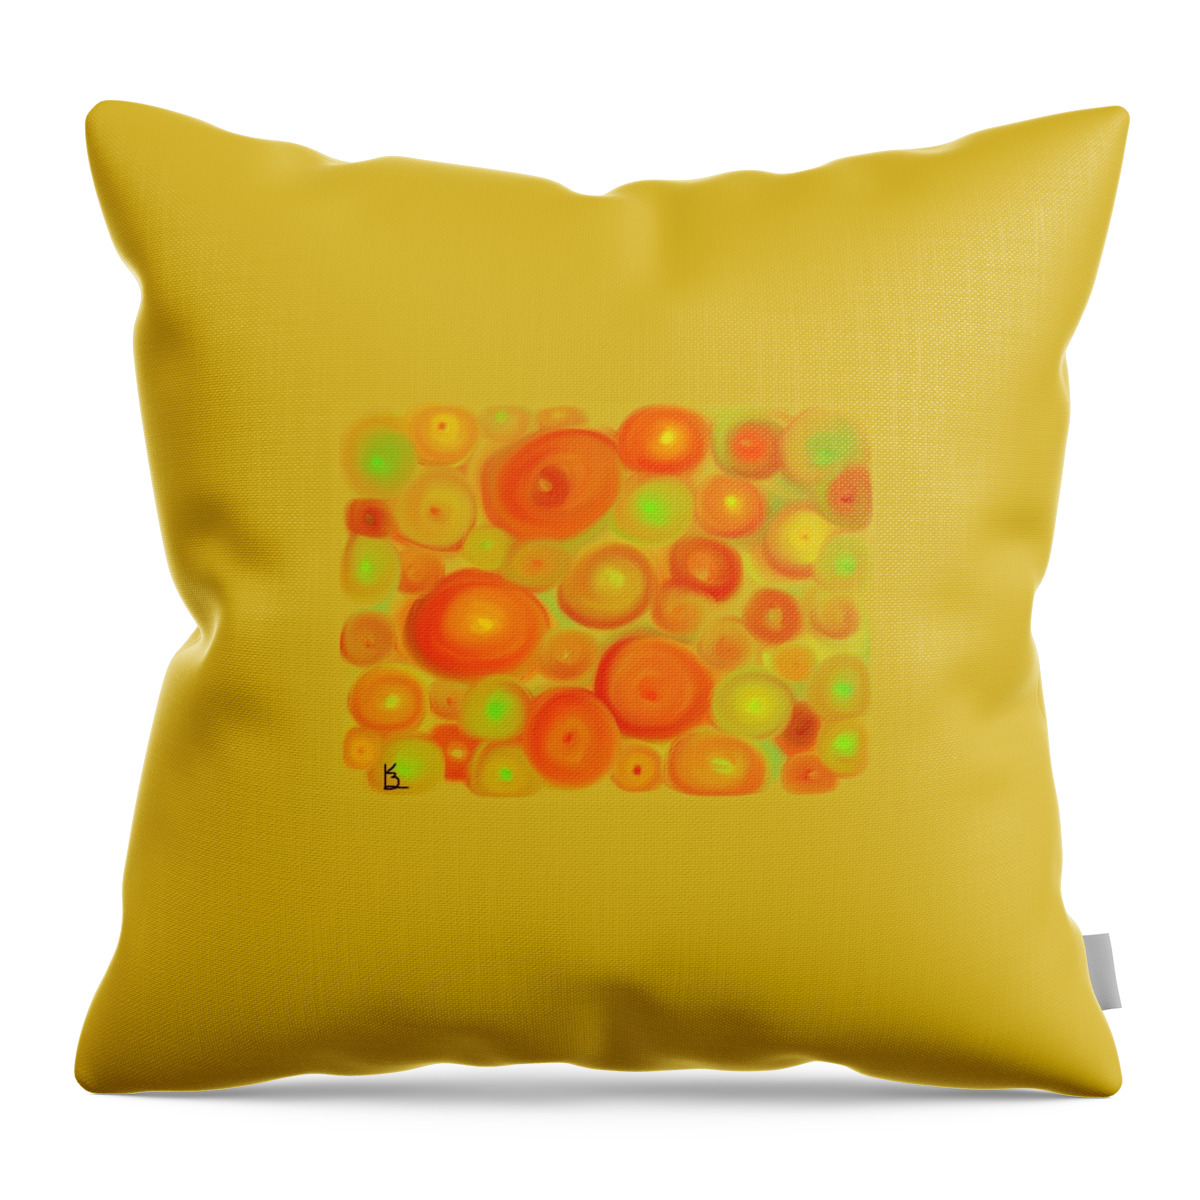 Digital Art Throw Pillow featuring the digital art Red-Orange Circle Abstract by Karen Buford